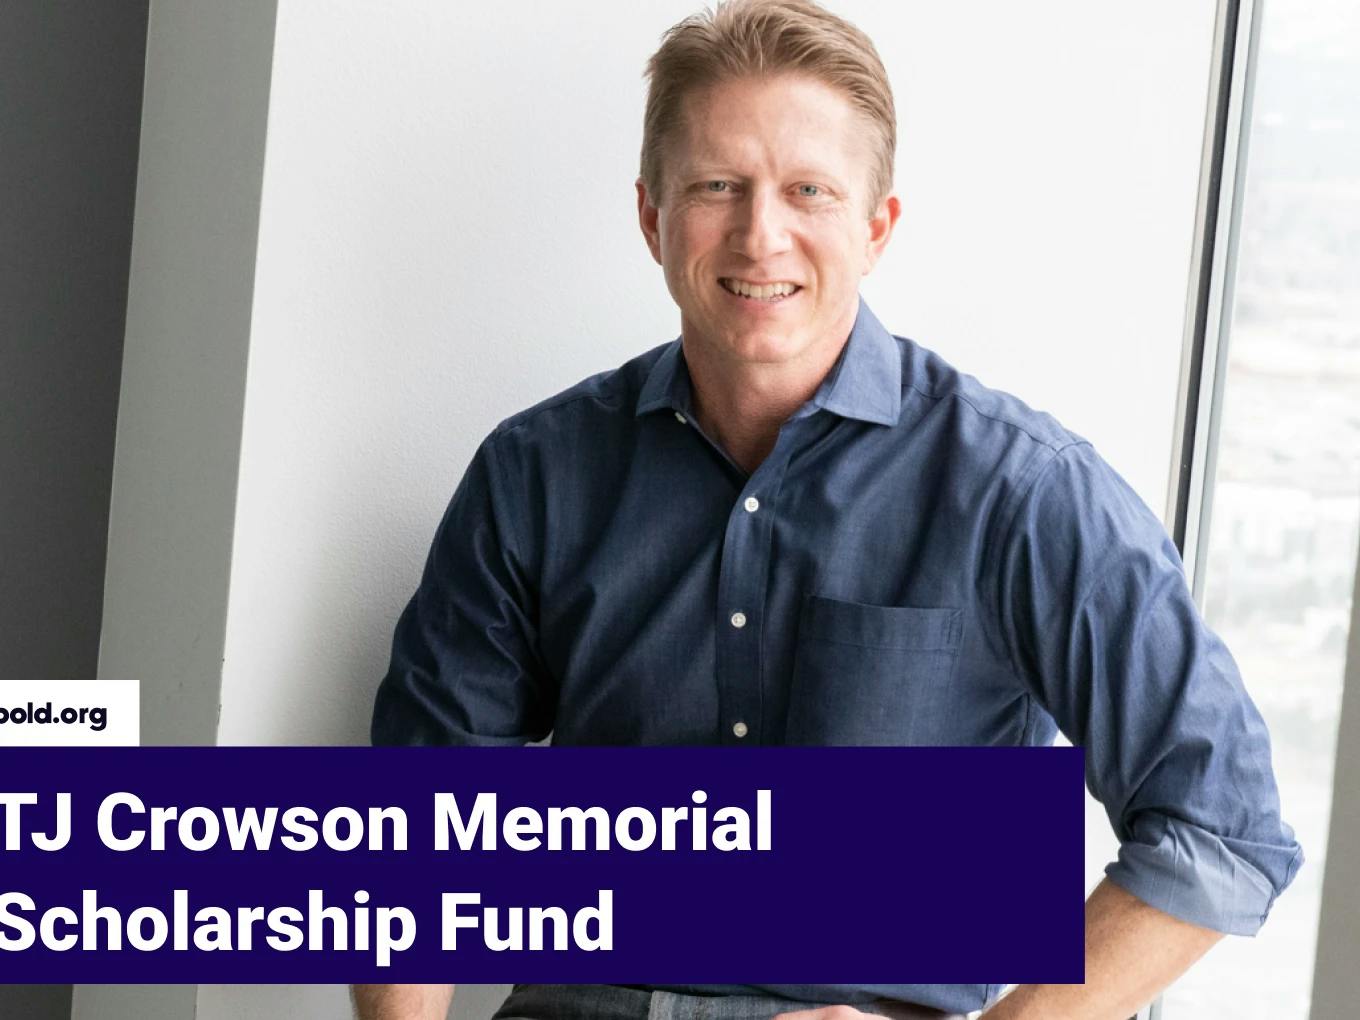 TJ Crowson Memorial Scholarship Fund